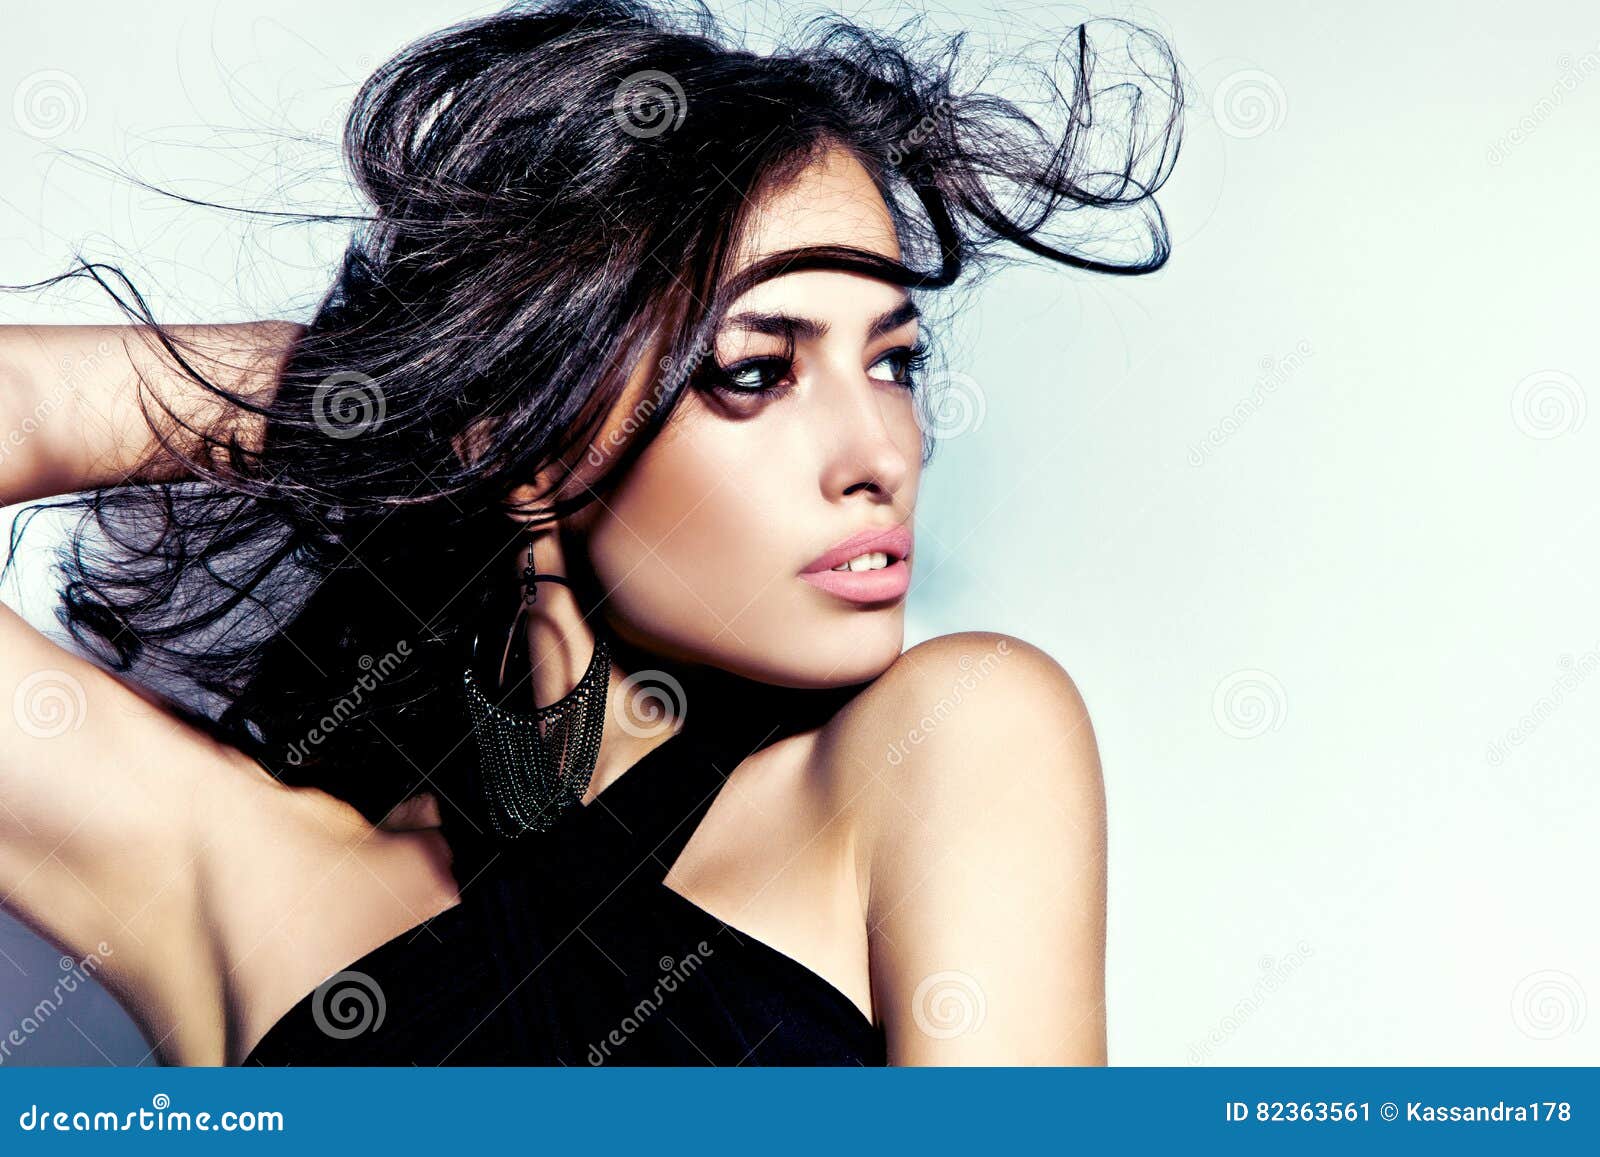 Exotic Brunette Beauty Stock Image Image Of Wild Seductive 82363561